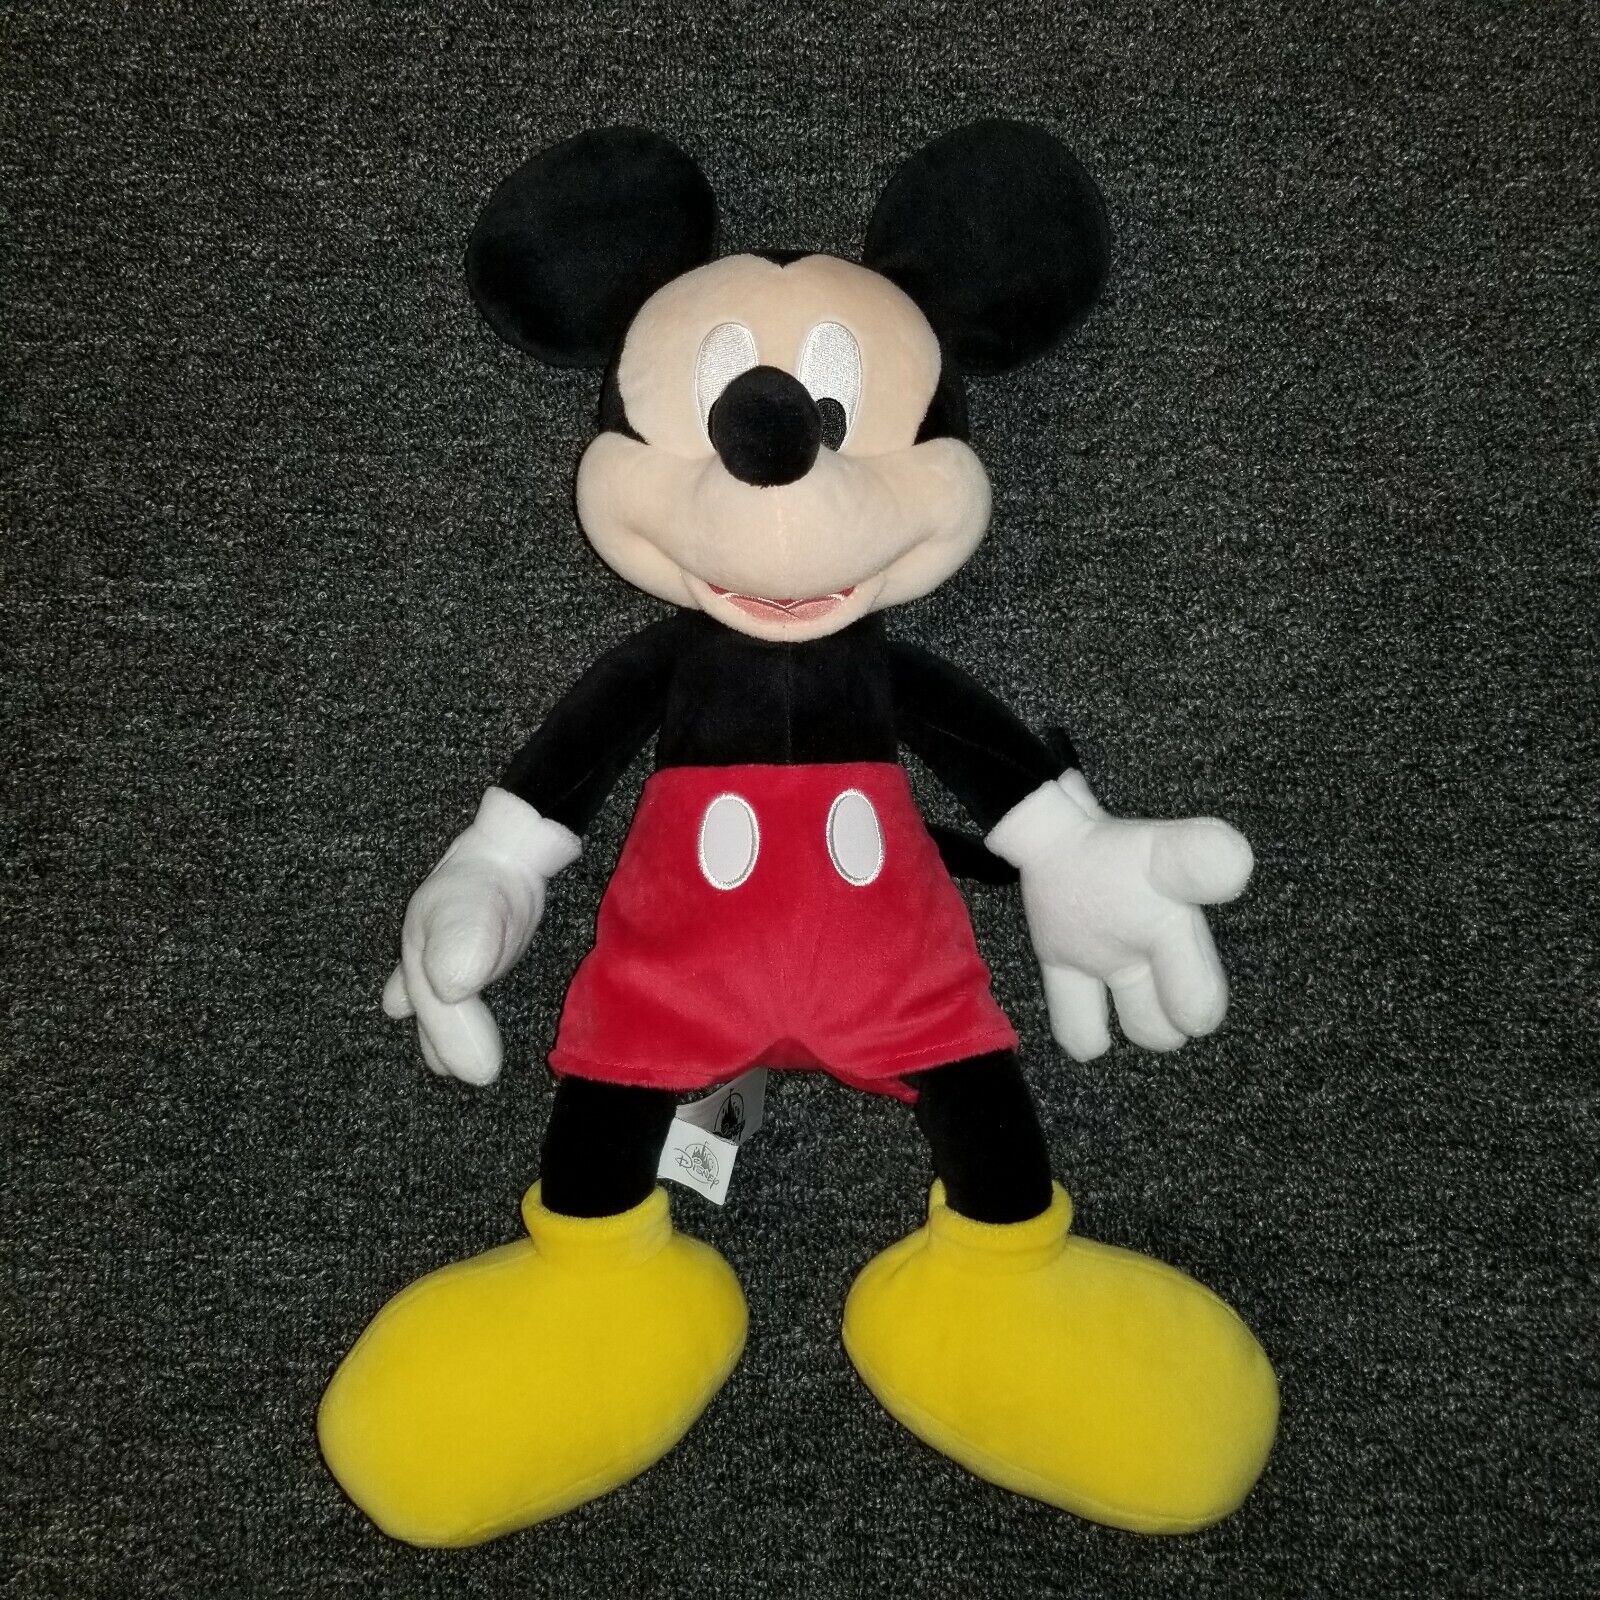 Mickey Mouse Plush Large 16 Inch Disney Cartoon Icon Stuffed Animal Collectible